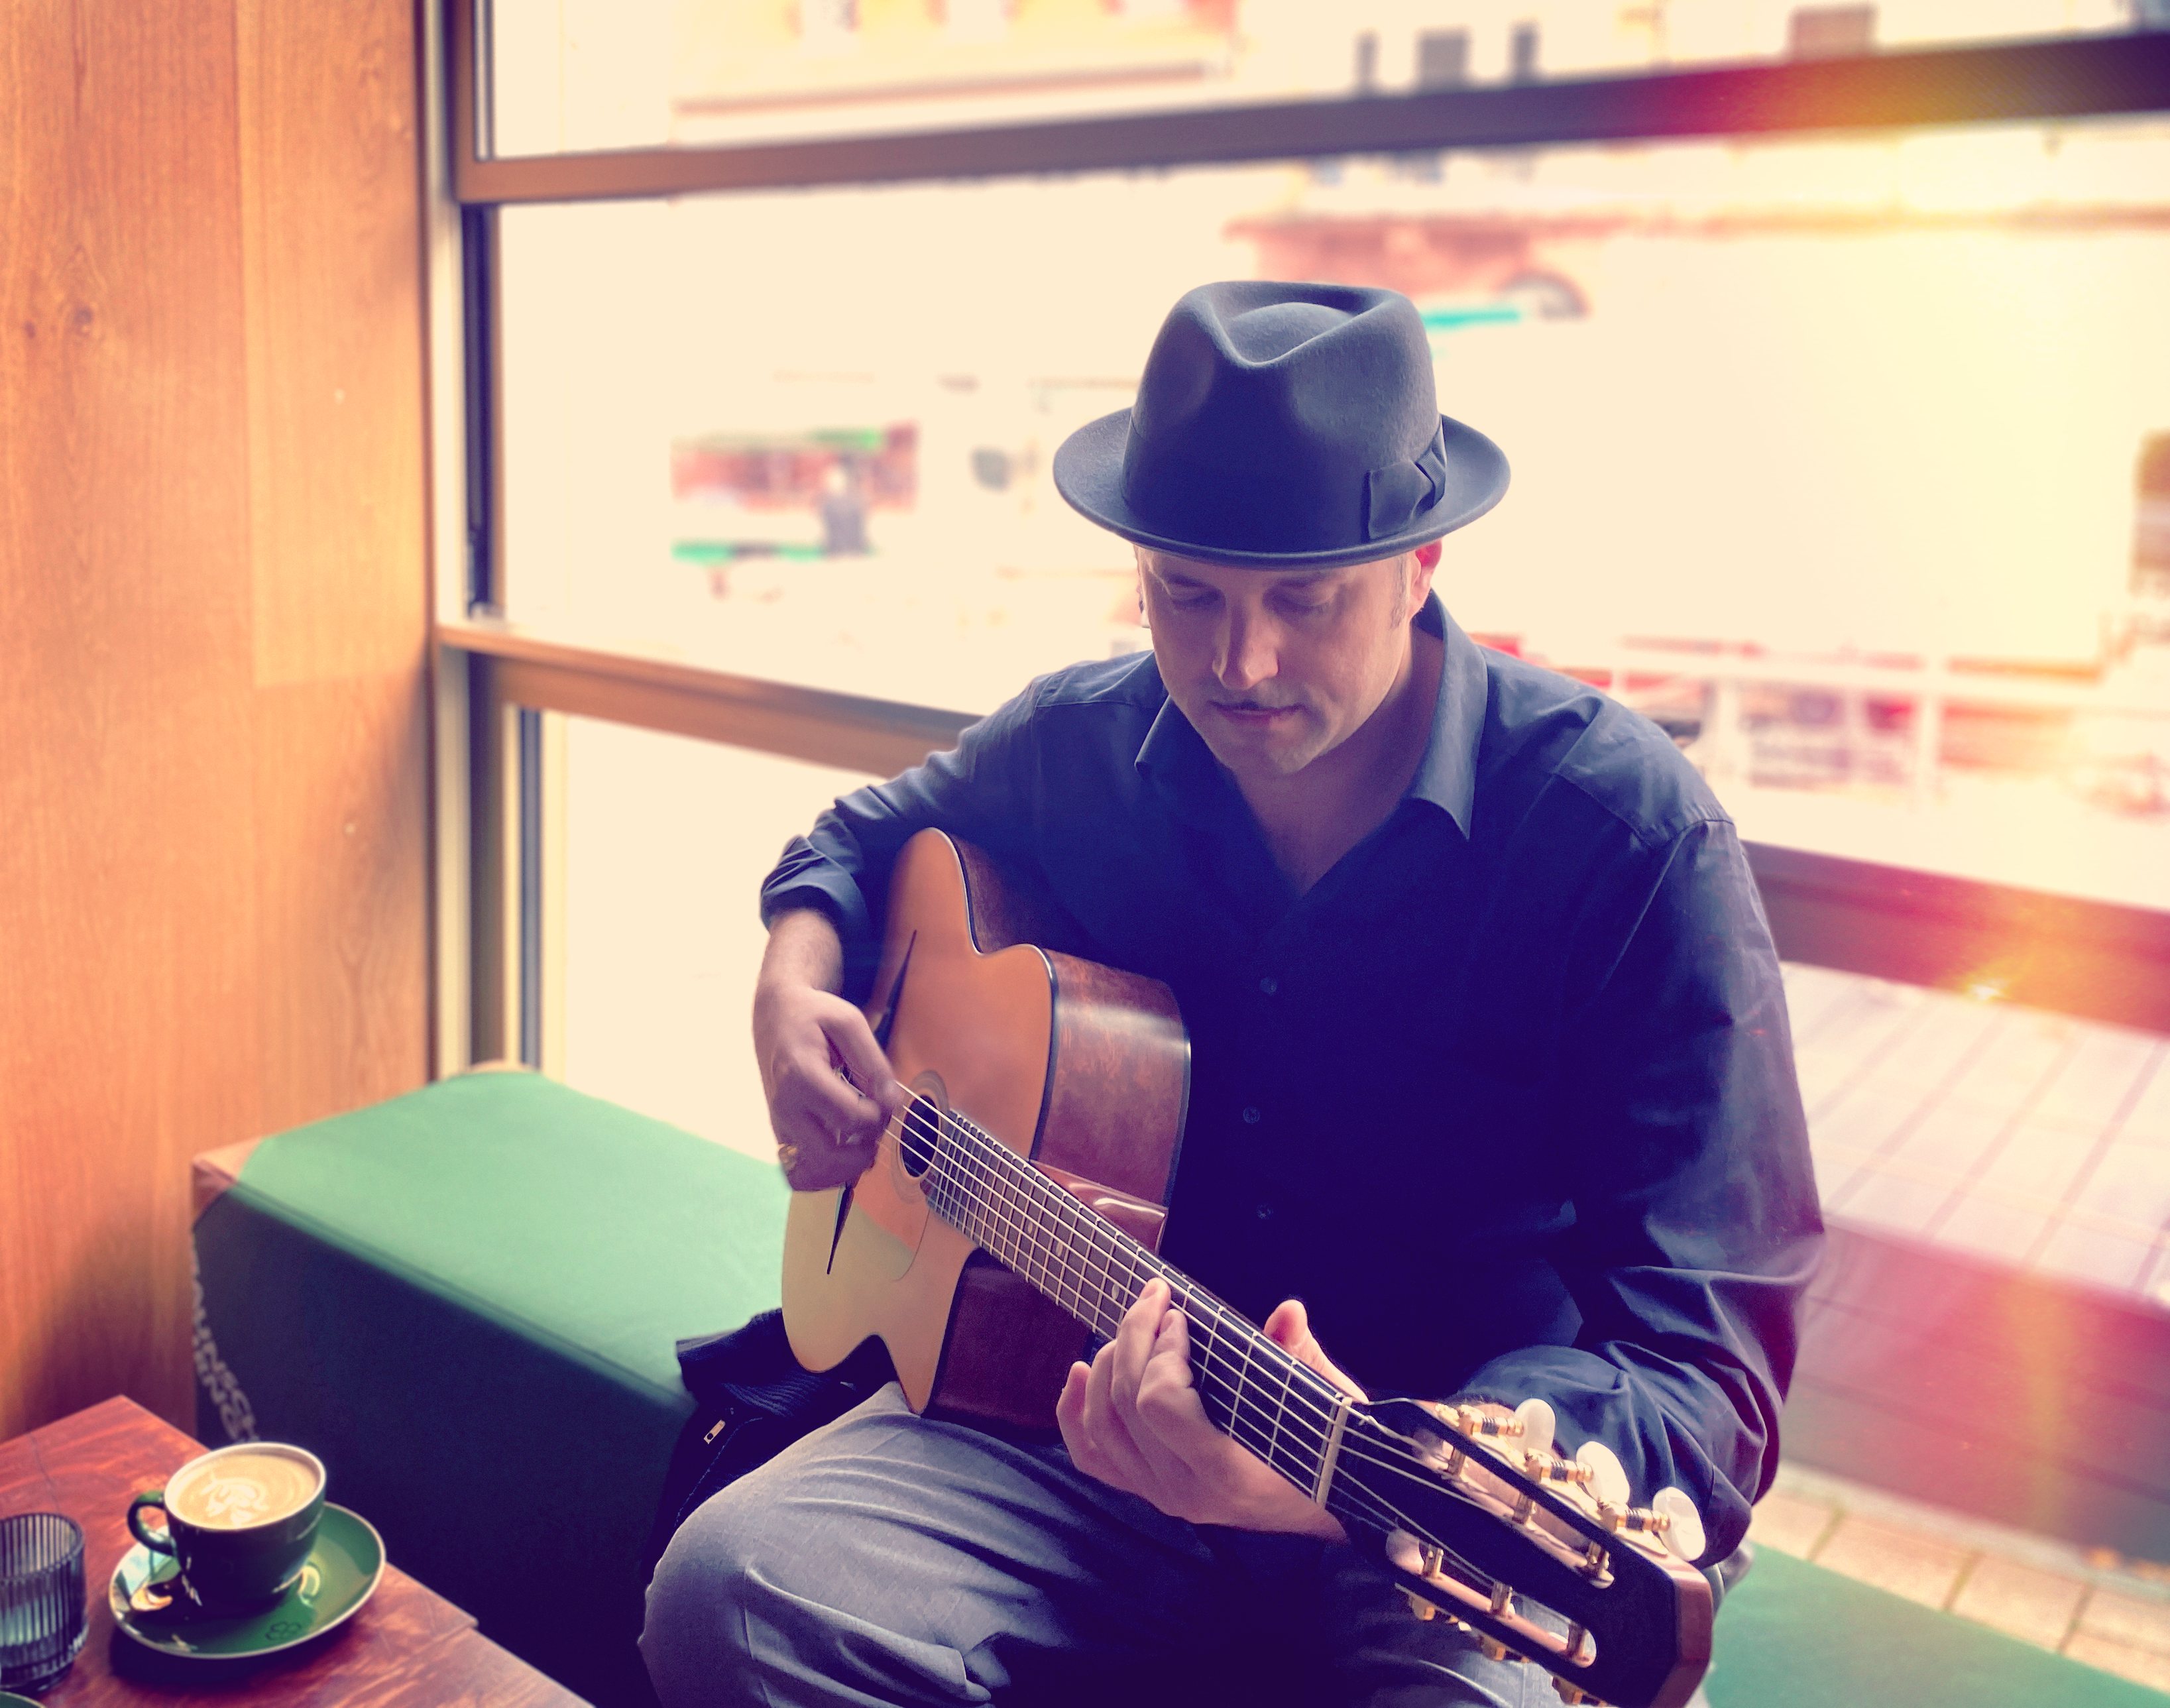 Sebastian Rudolfo Christ spielt Gitarre in einem Café.